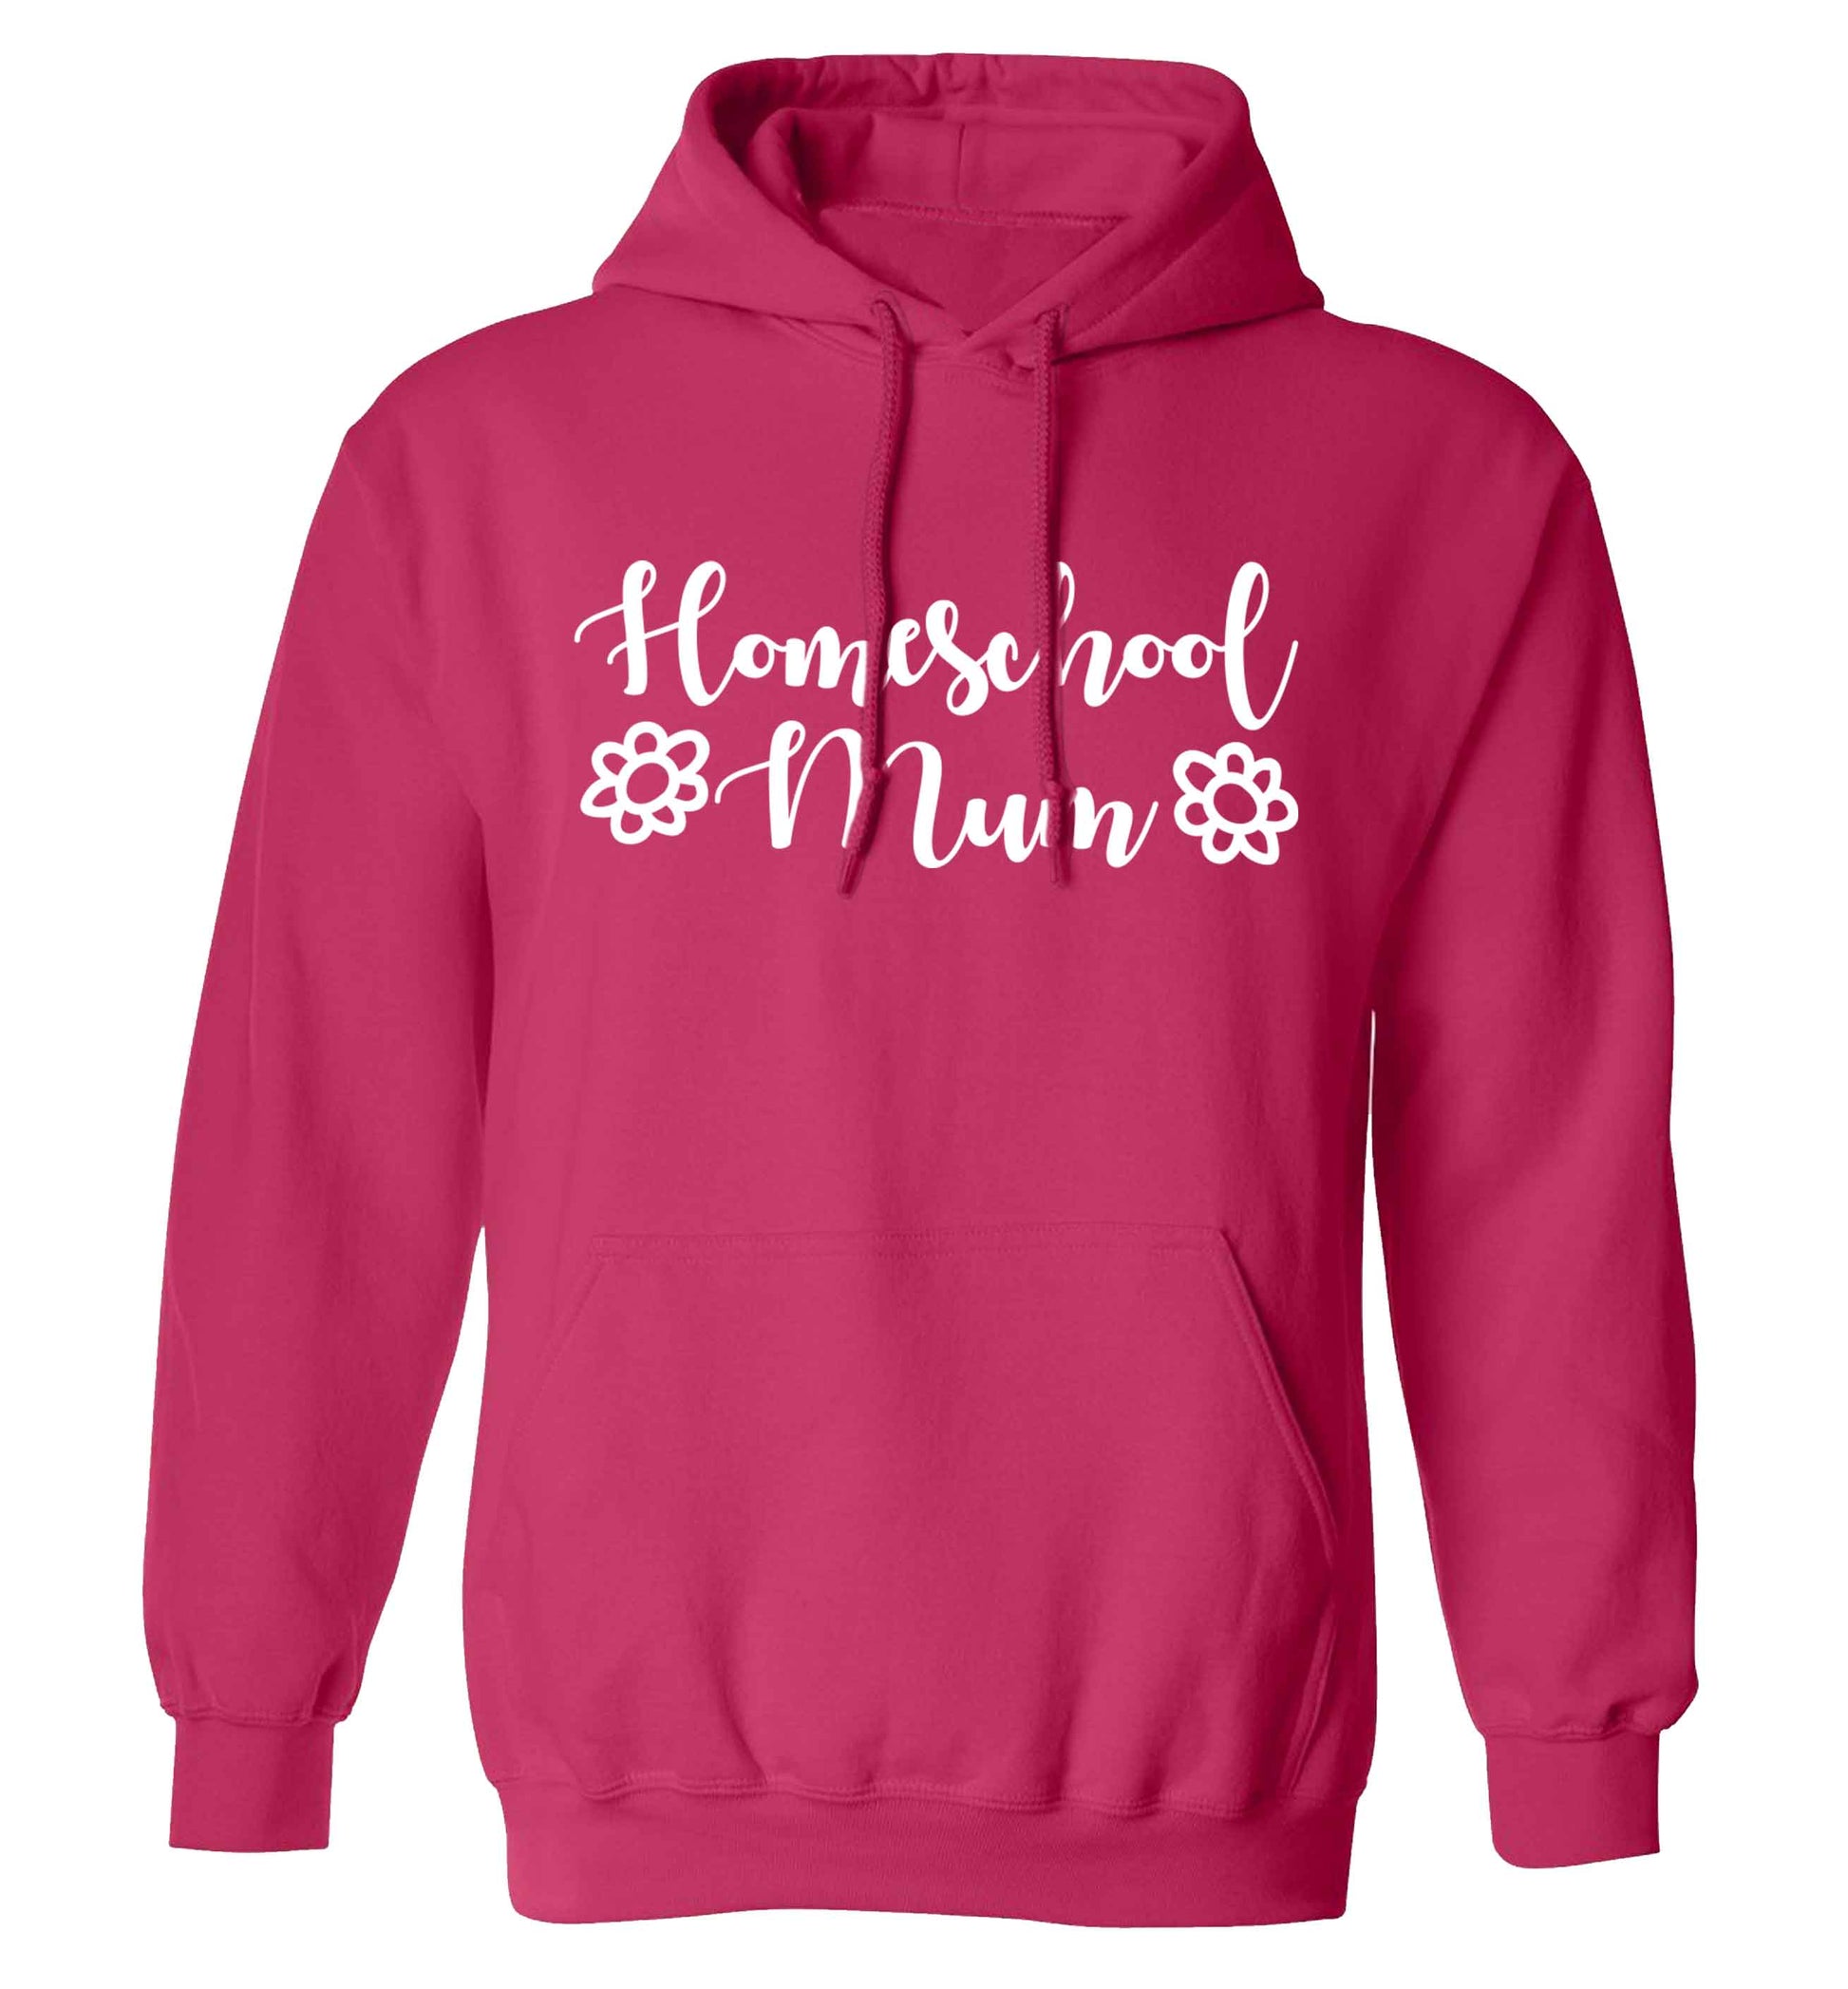 Homeschool mum adults unisex pink hoodie 2XL